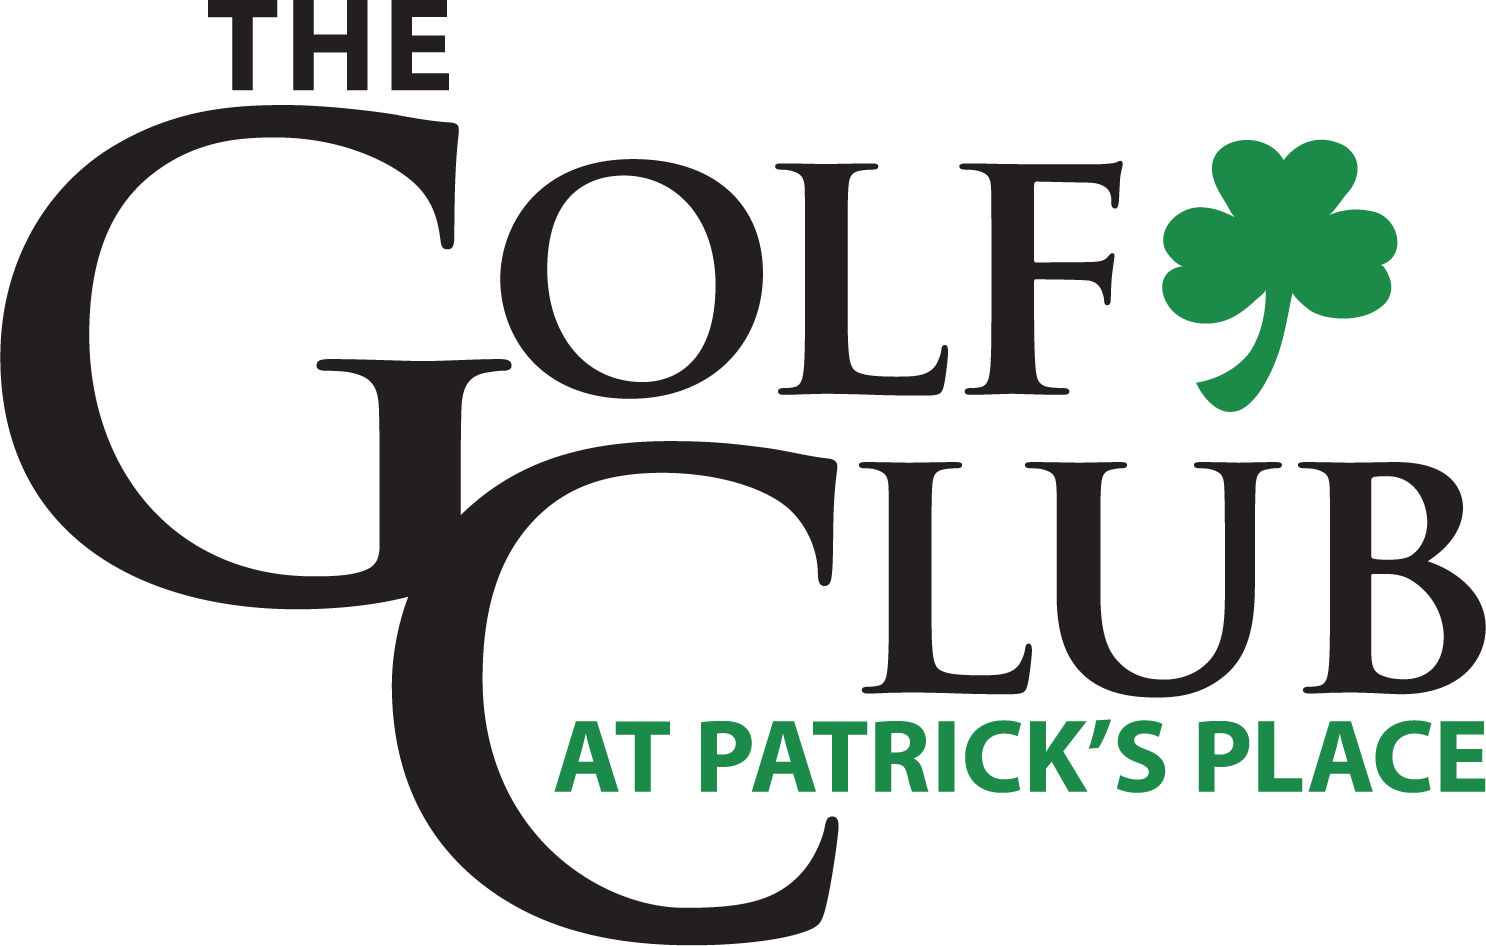 The Golf Club at Patrick’s